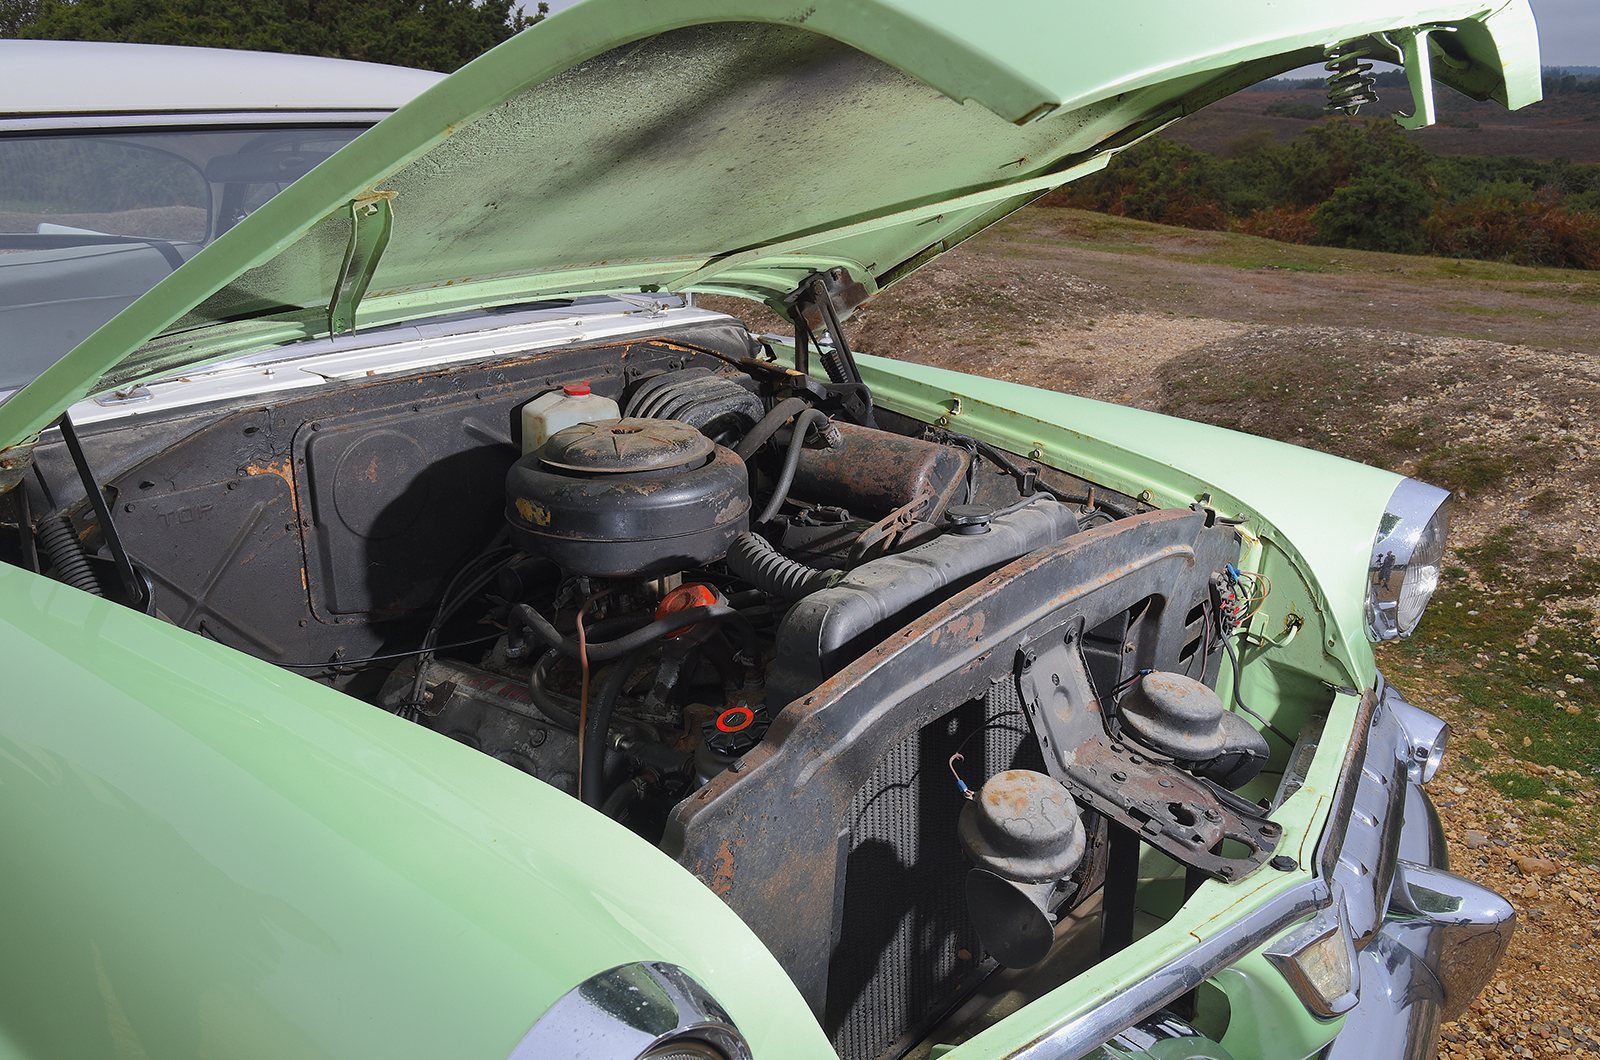 Classic & Sports Car – Critic’s choice: Mark Kermode and his Dodge Coronet